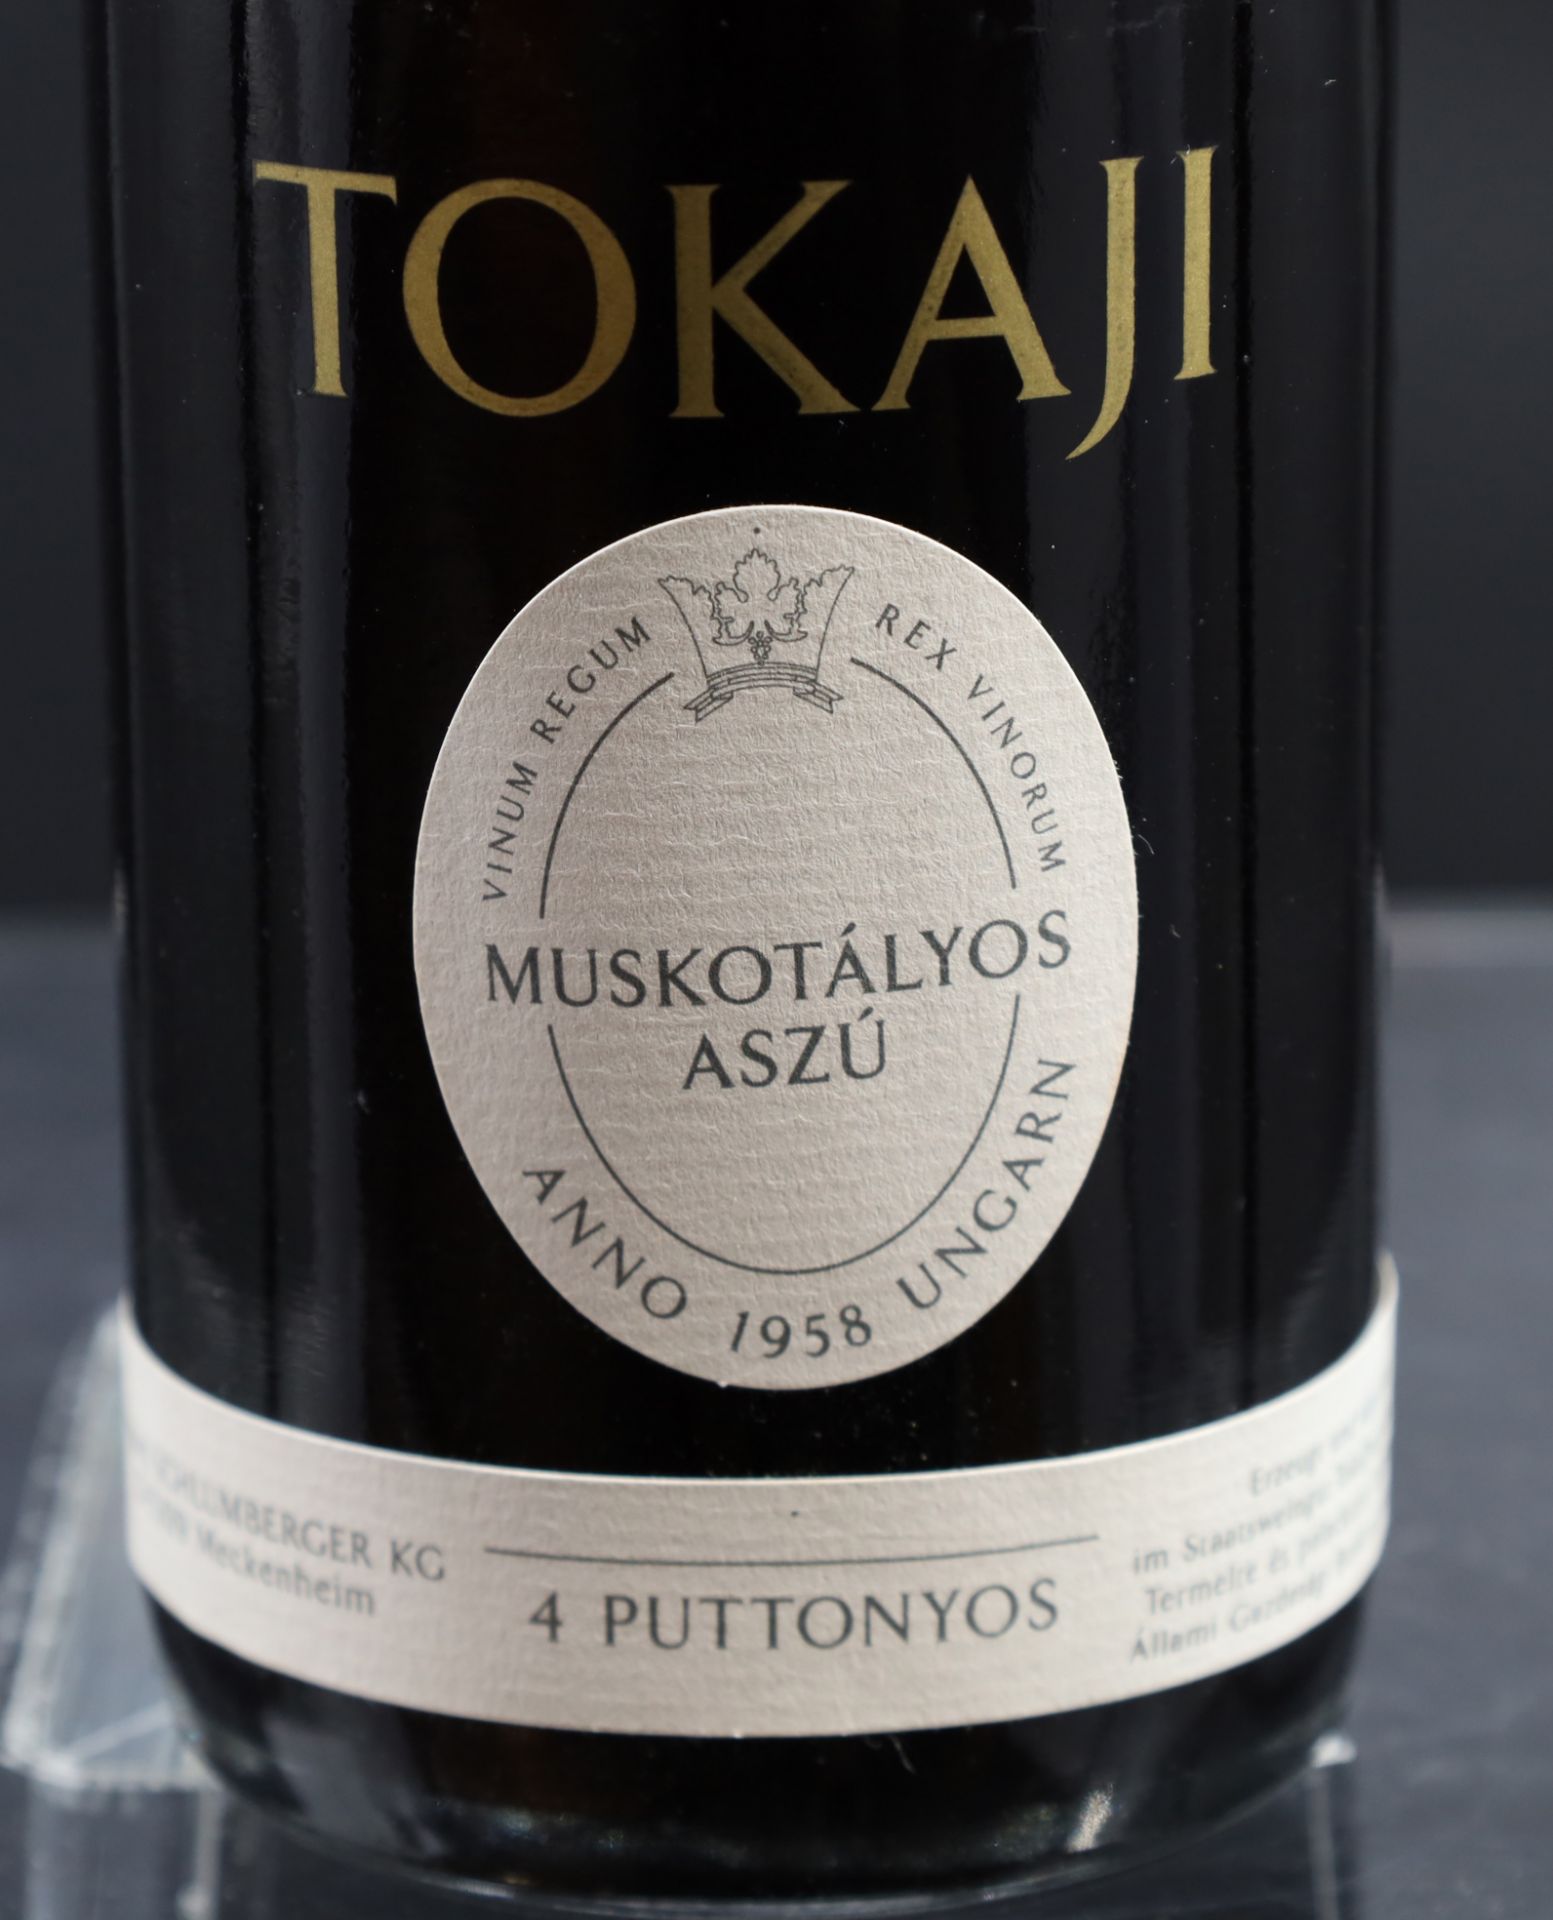 1 bottle of TOKAJI. Aszu. 4 puttonyos. Hungary. - Image 3 of 7